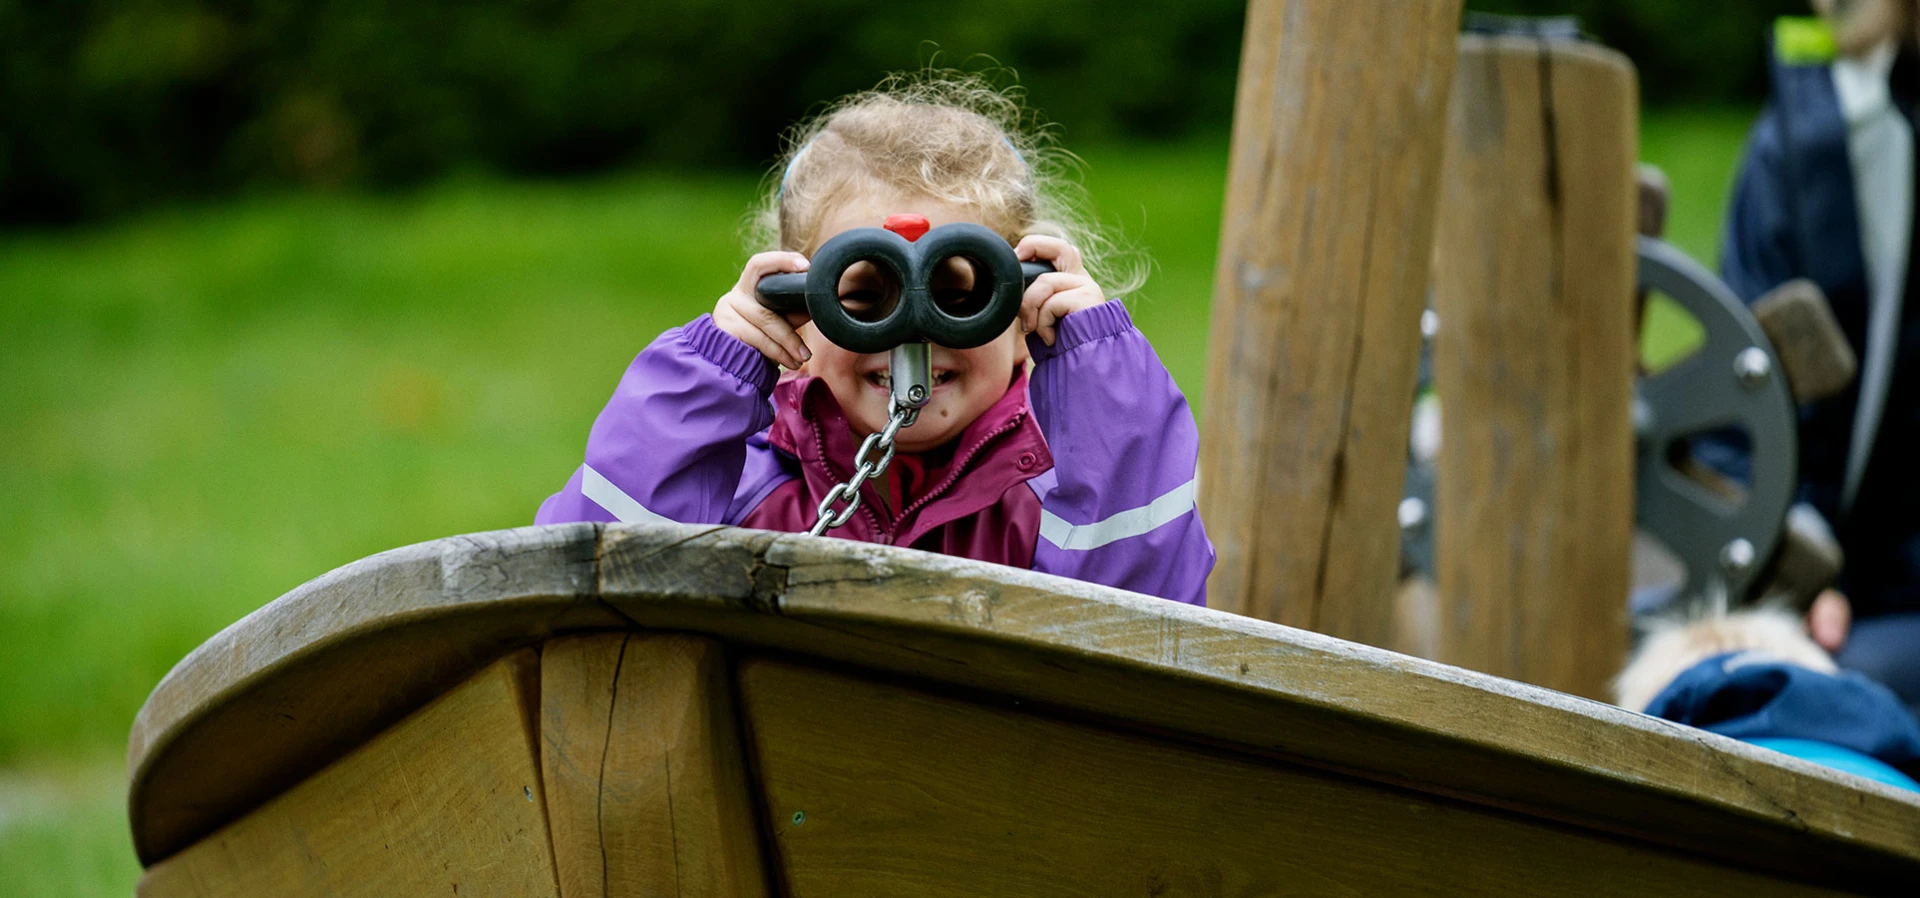 Girl looking through binoculars on a playground  